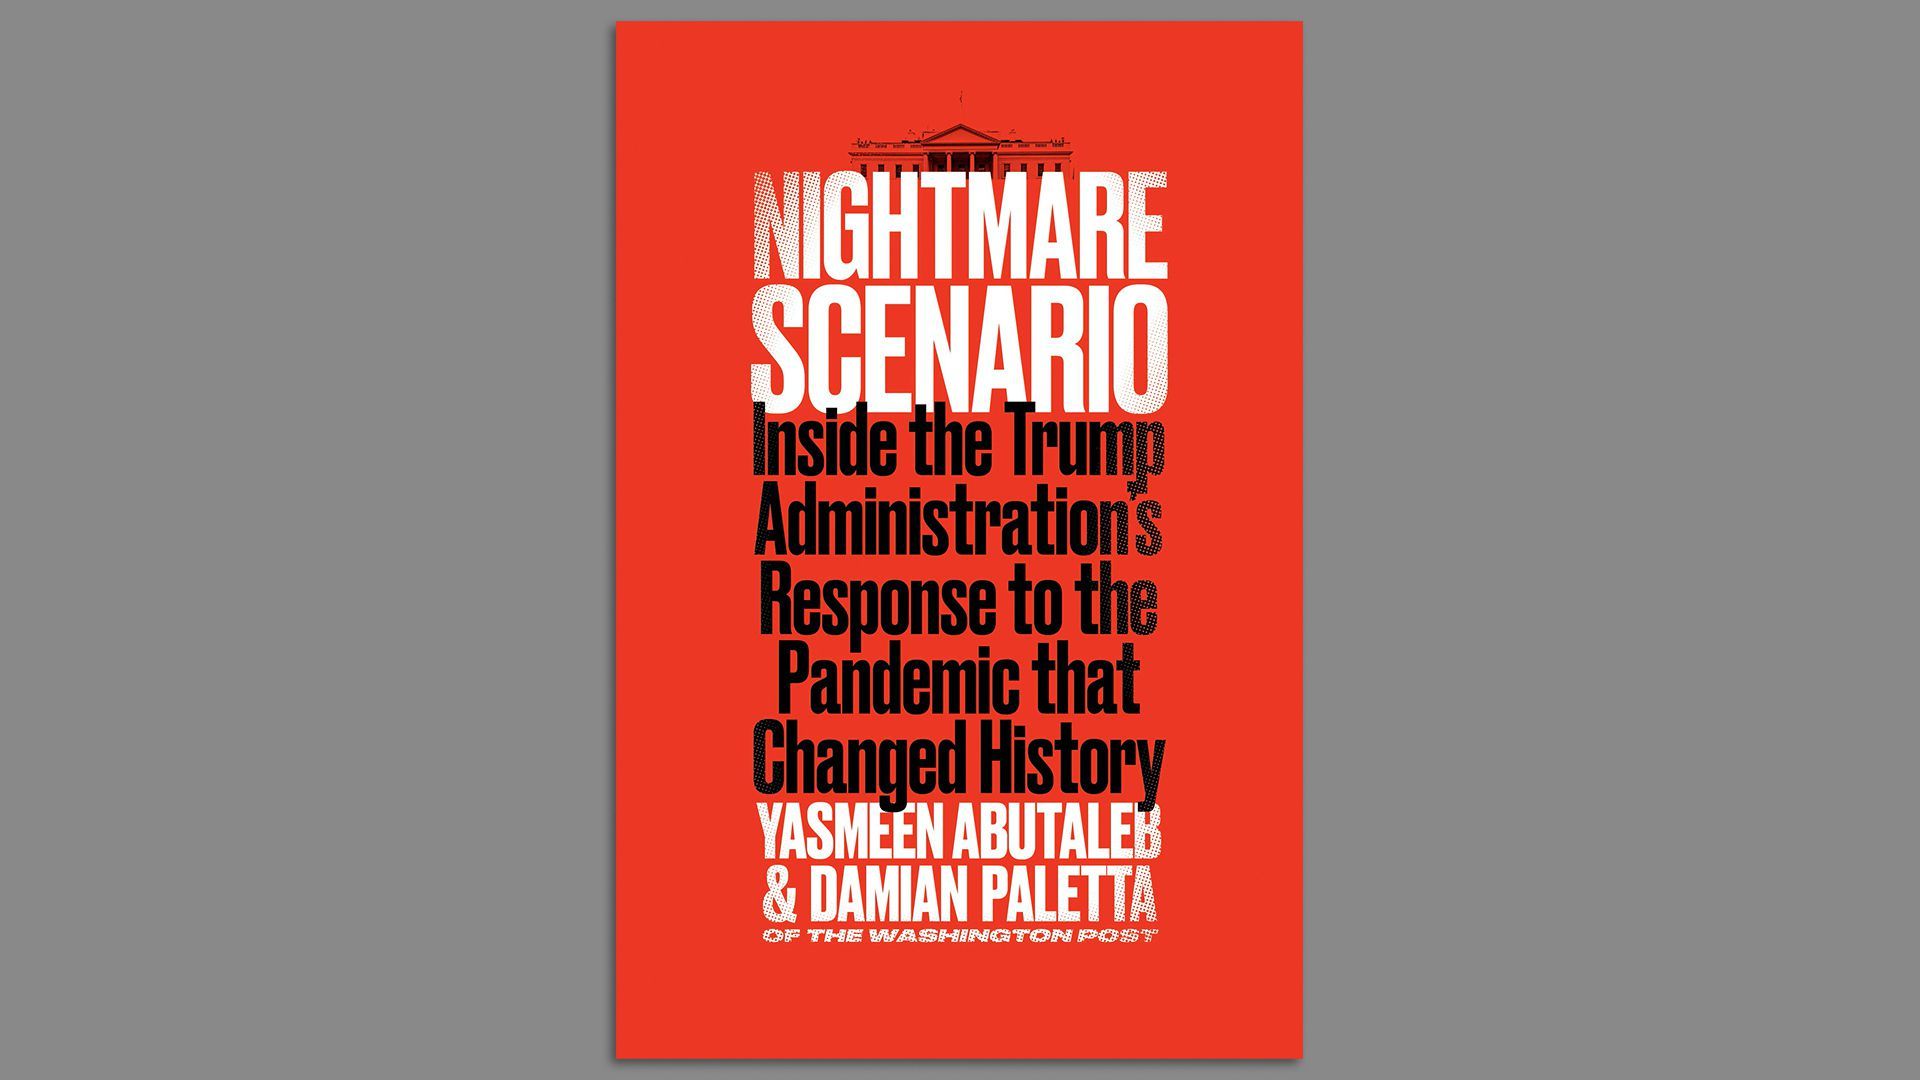 "Nightmare Scenario" book cover